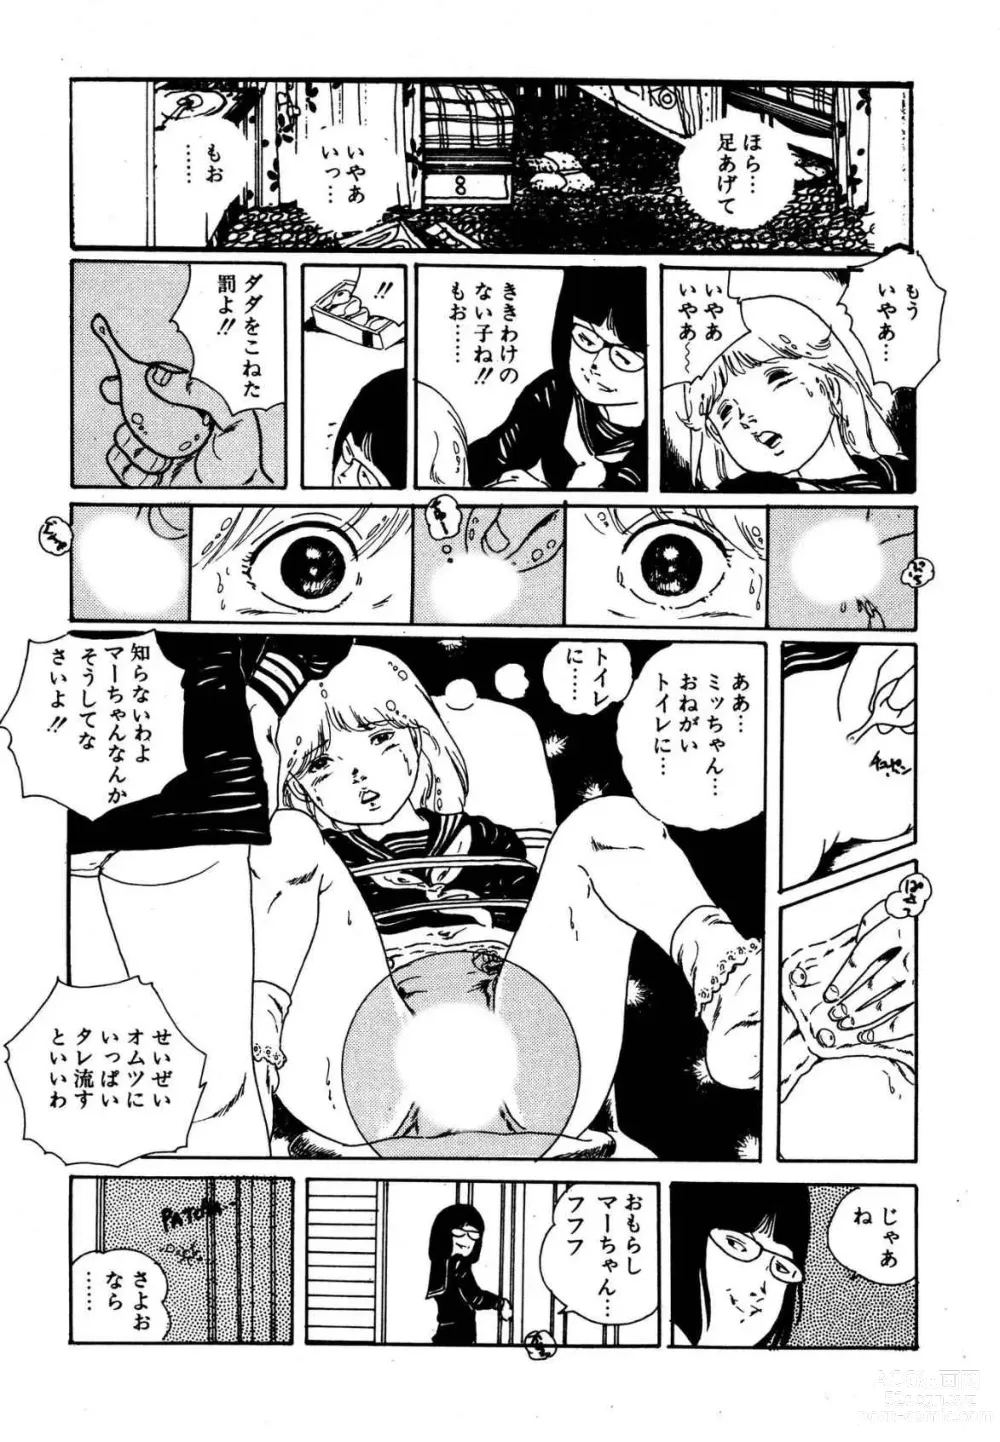 Page 18 of manga Dreaming fairy